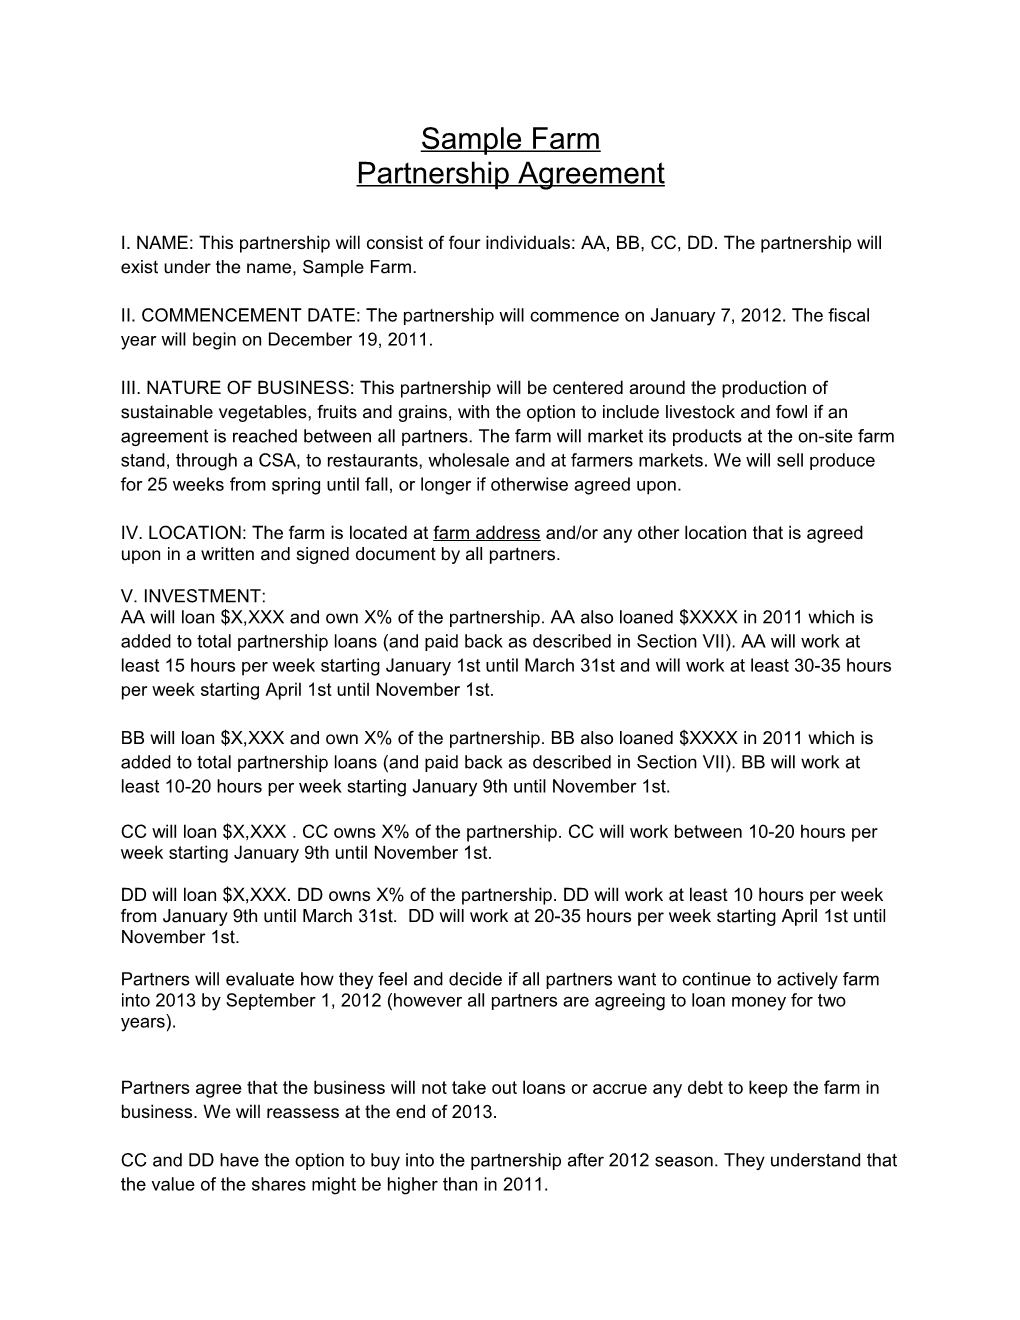 Partnership Agreement s1